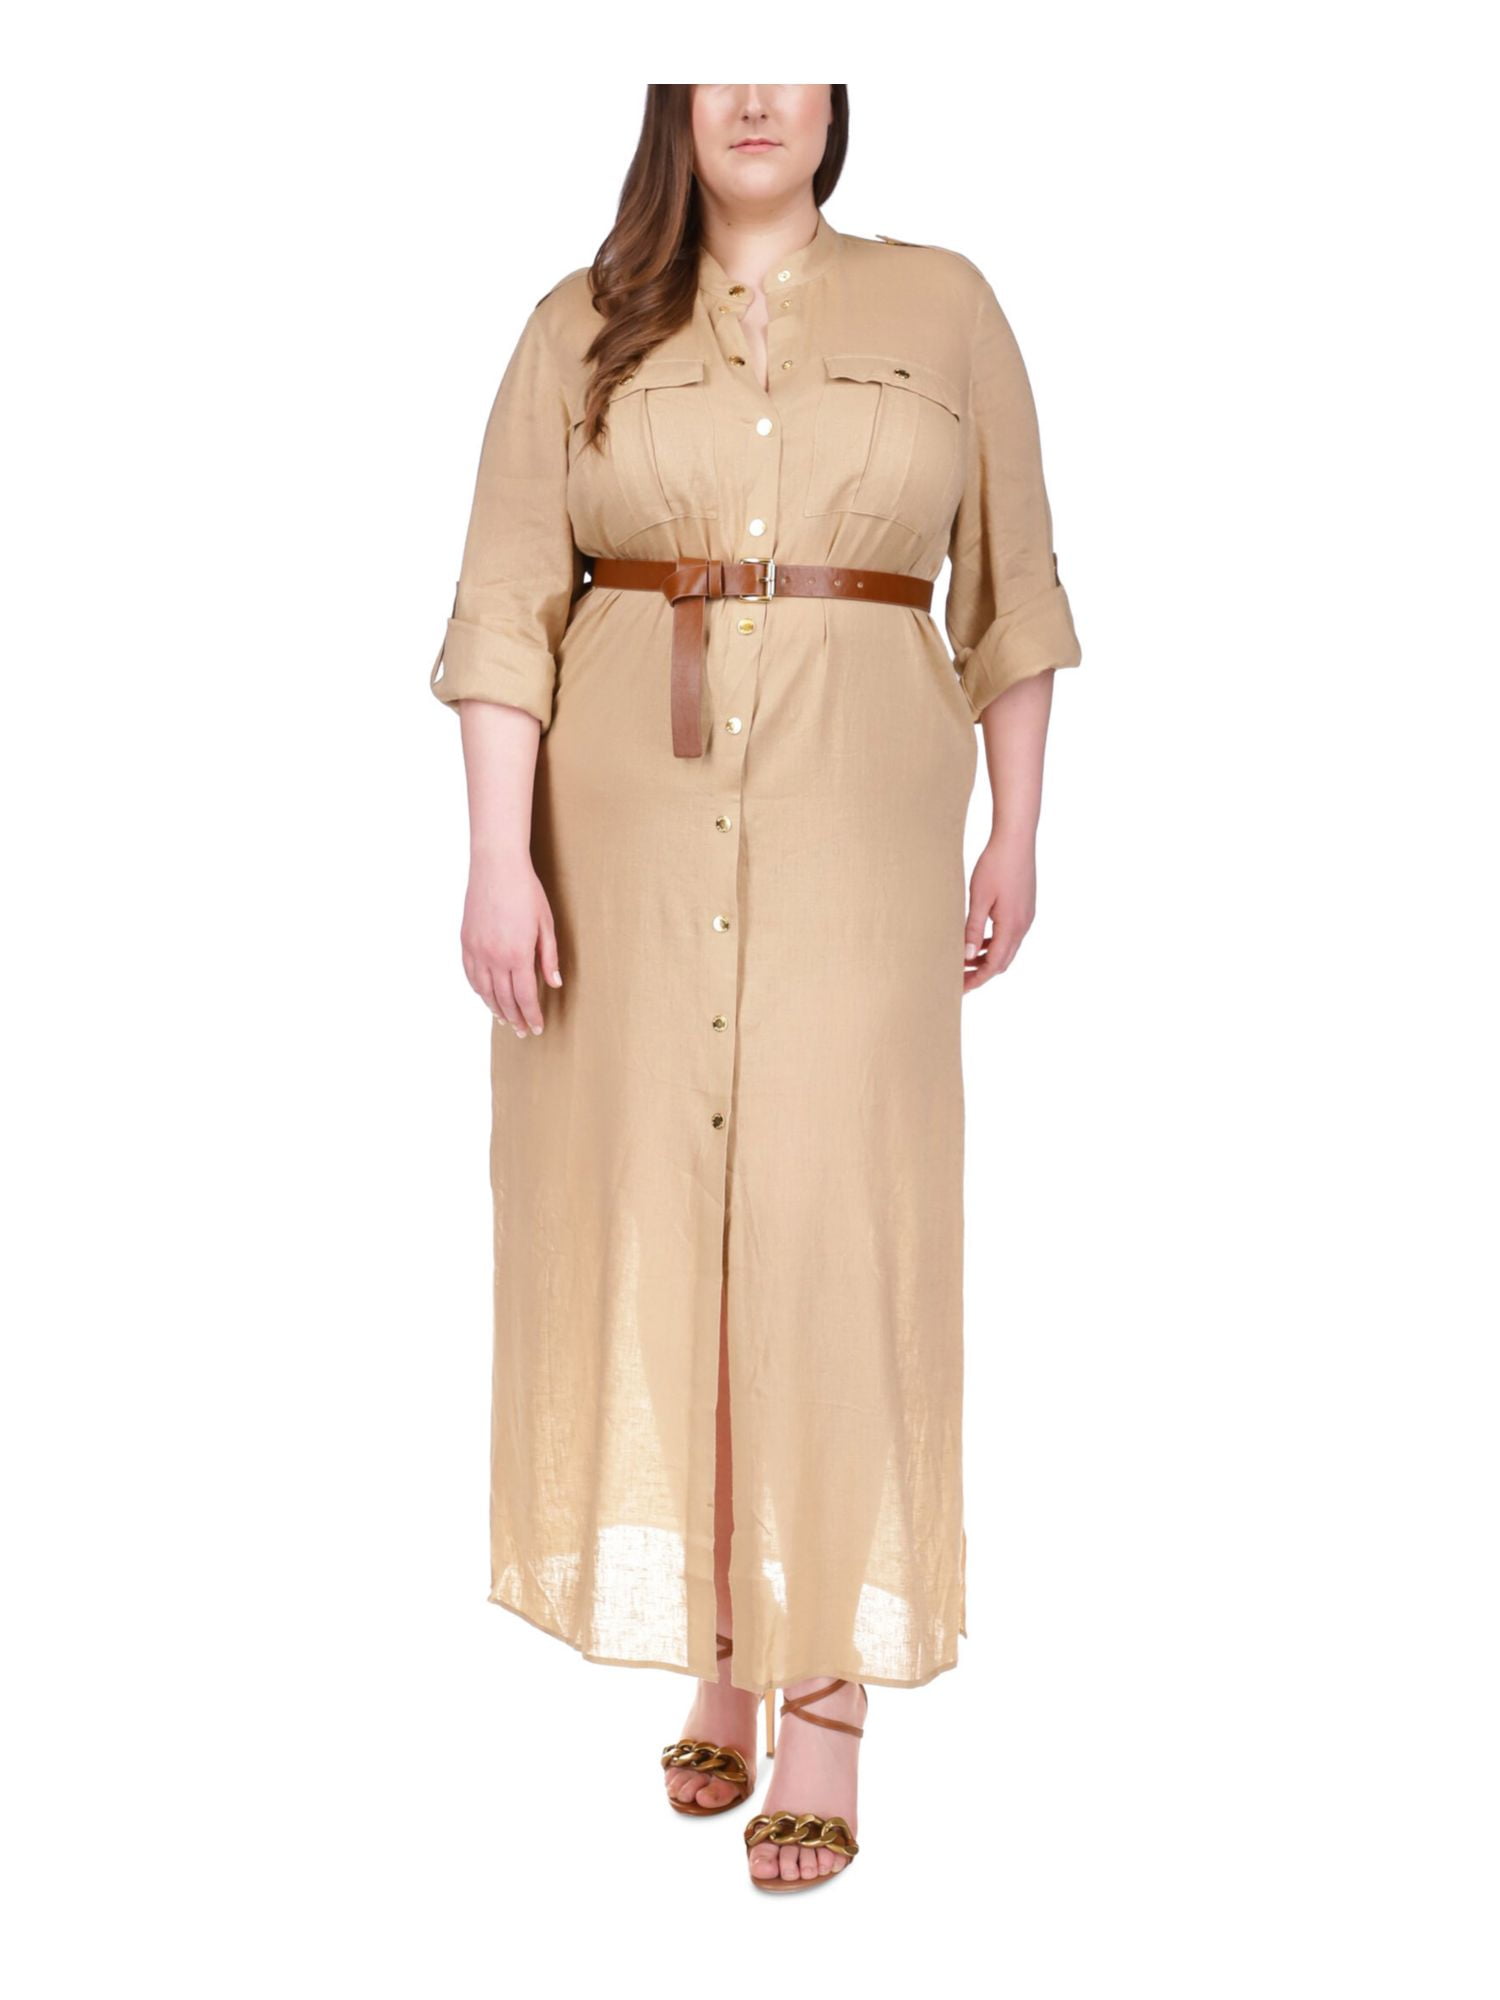 MICHAEL Michael Kors Size AnimalPrint StudTrim Maxi Dress  Plus size  dresses Maxi dress Plus size fashion